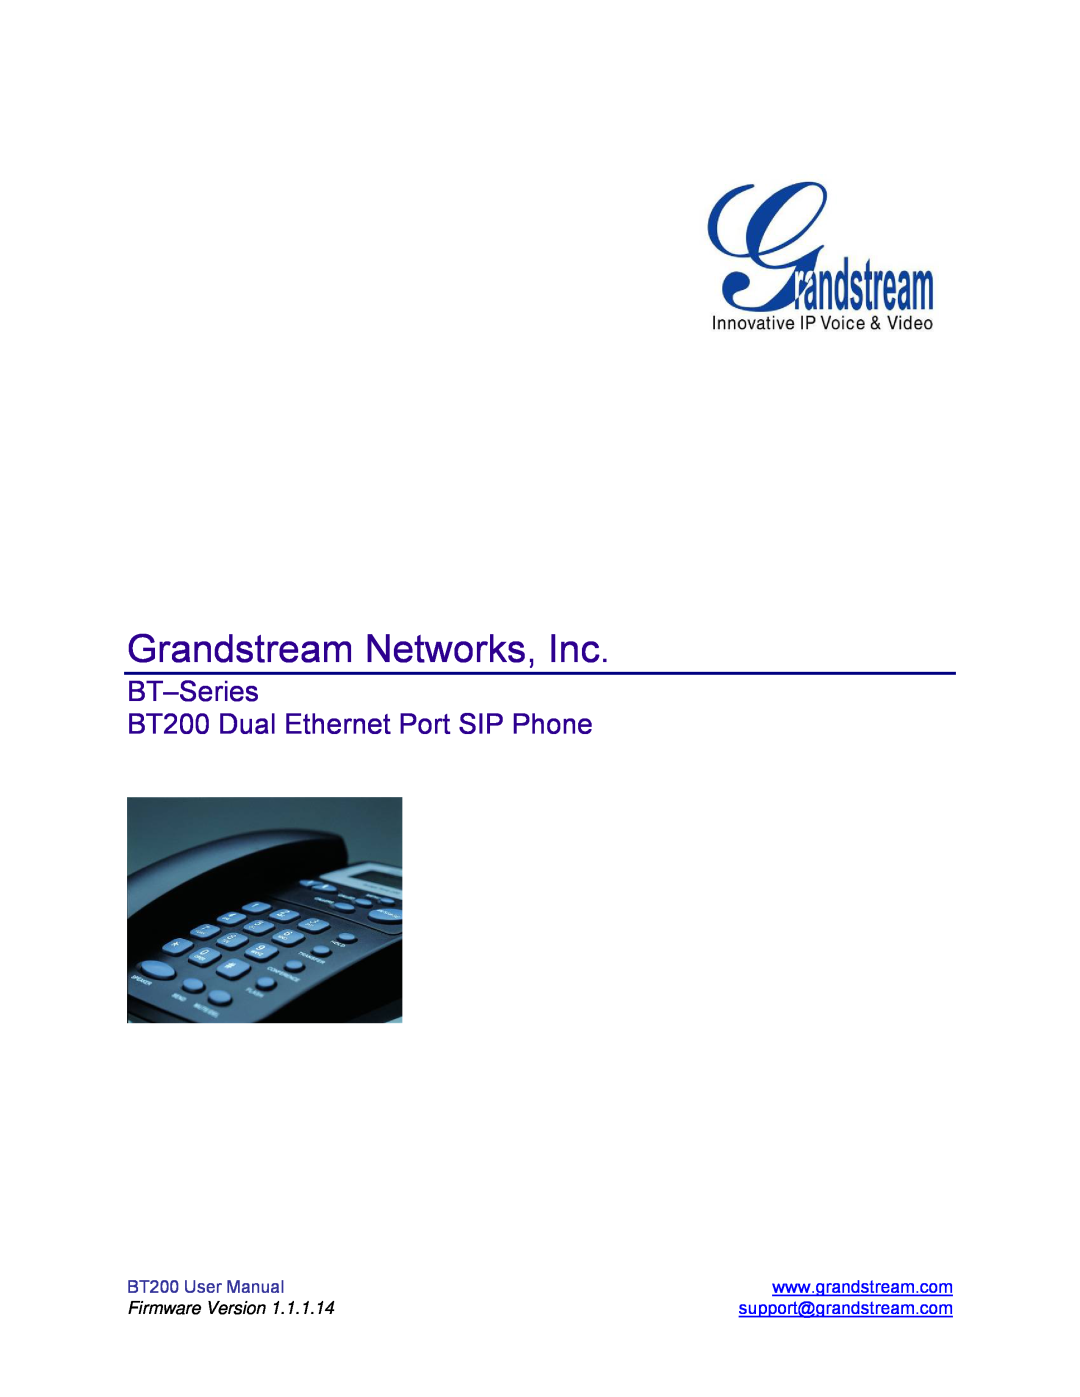 Grandstream Networks user manual BT200 User Manual, Grandstream Networks, Inc, Firmware Version 